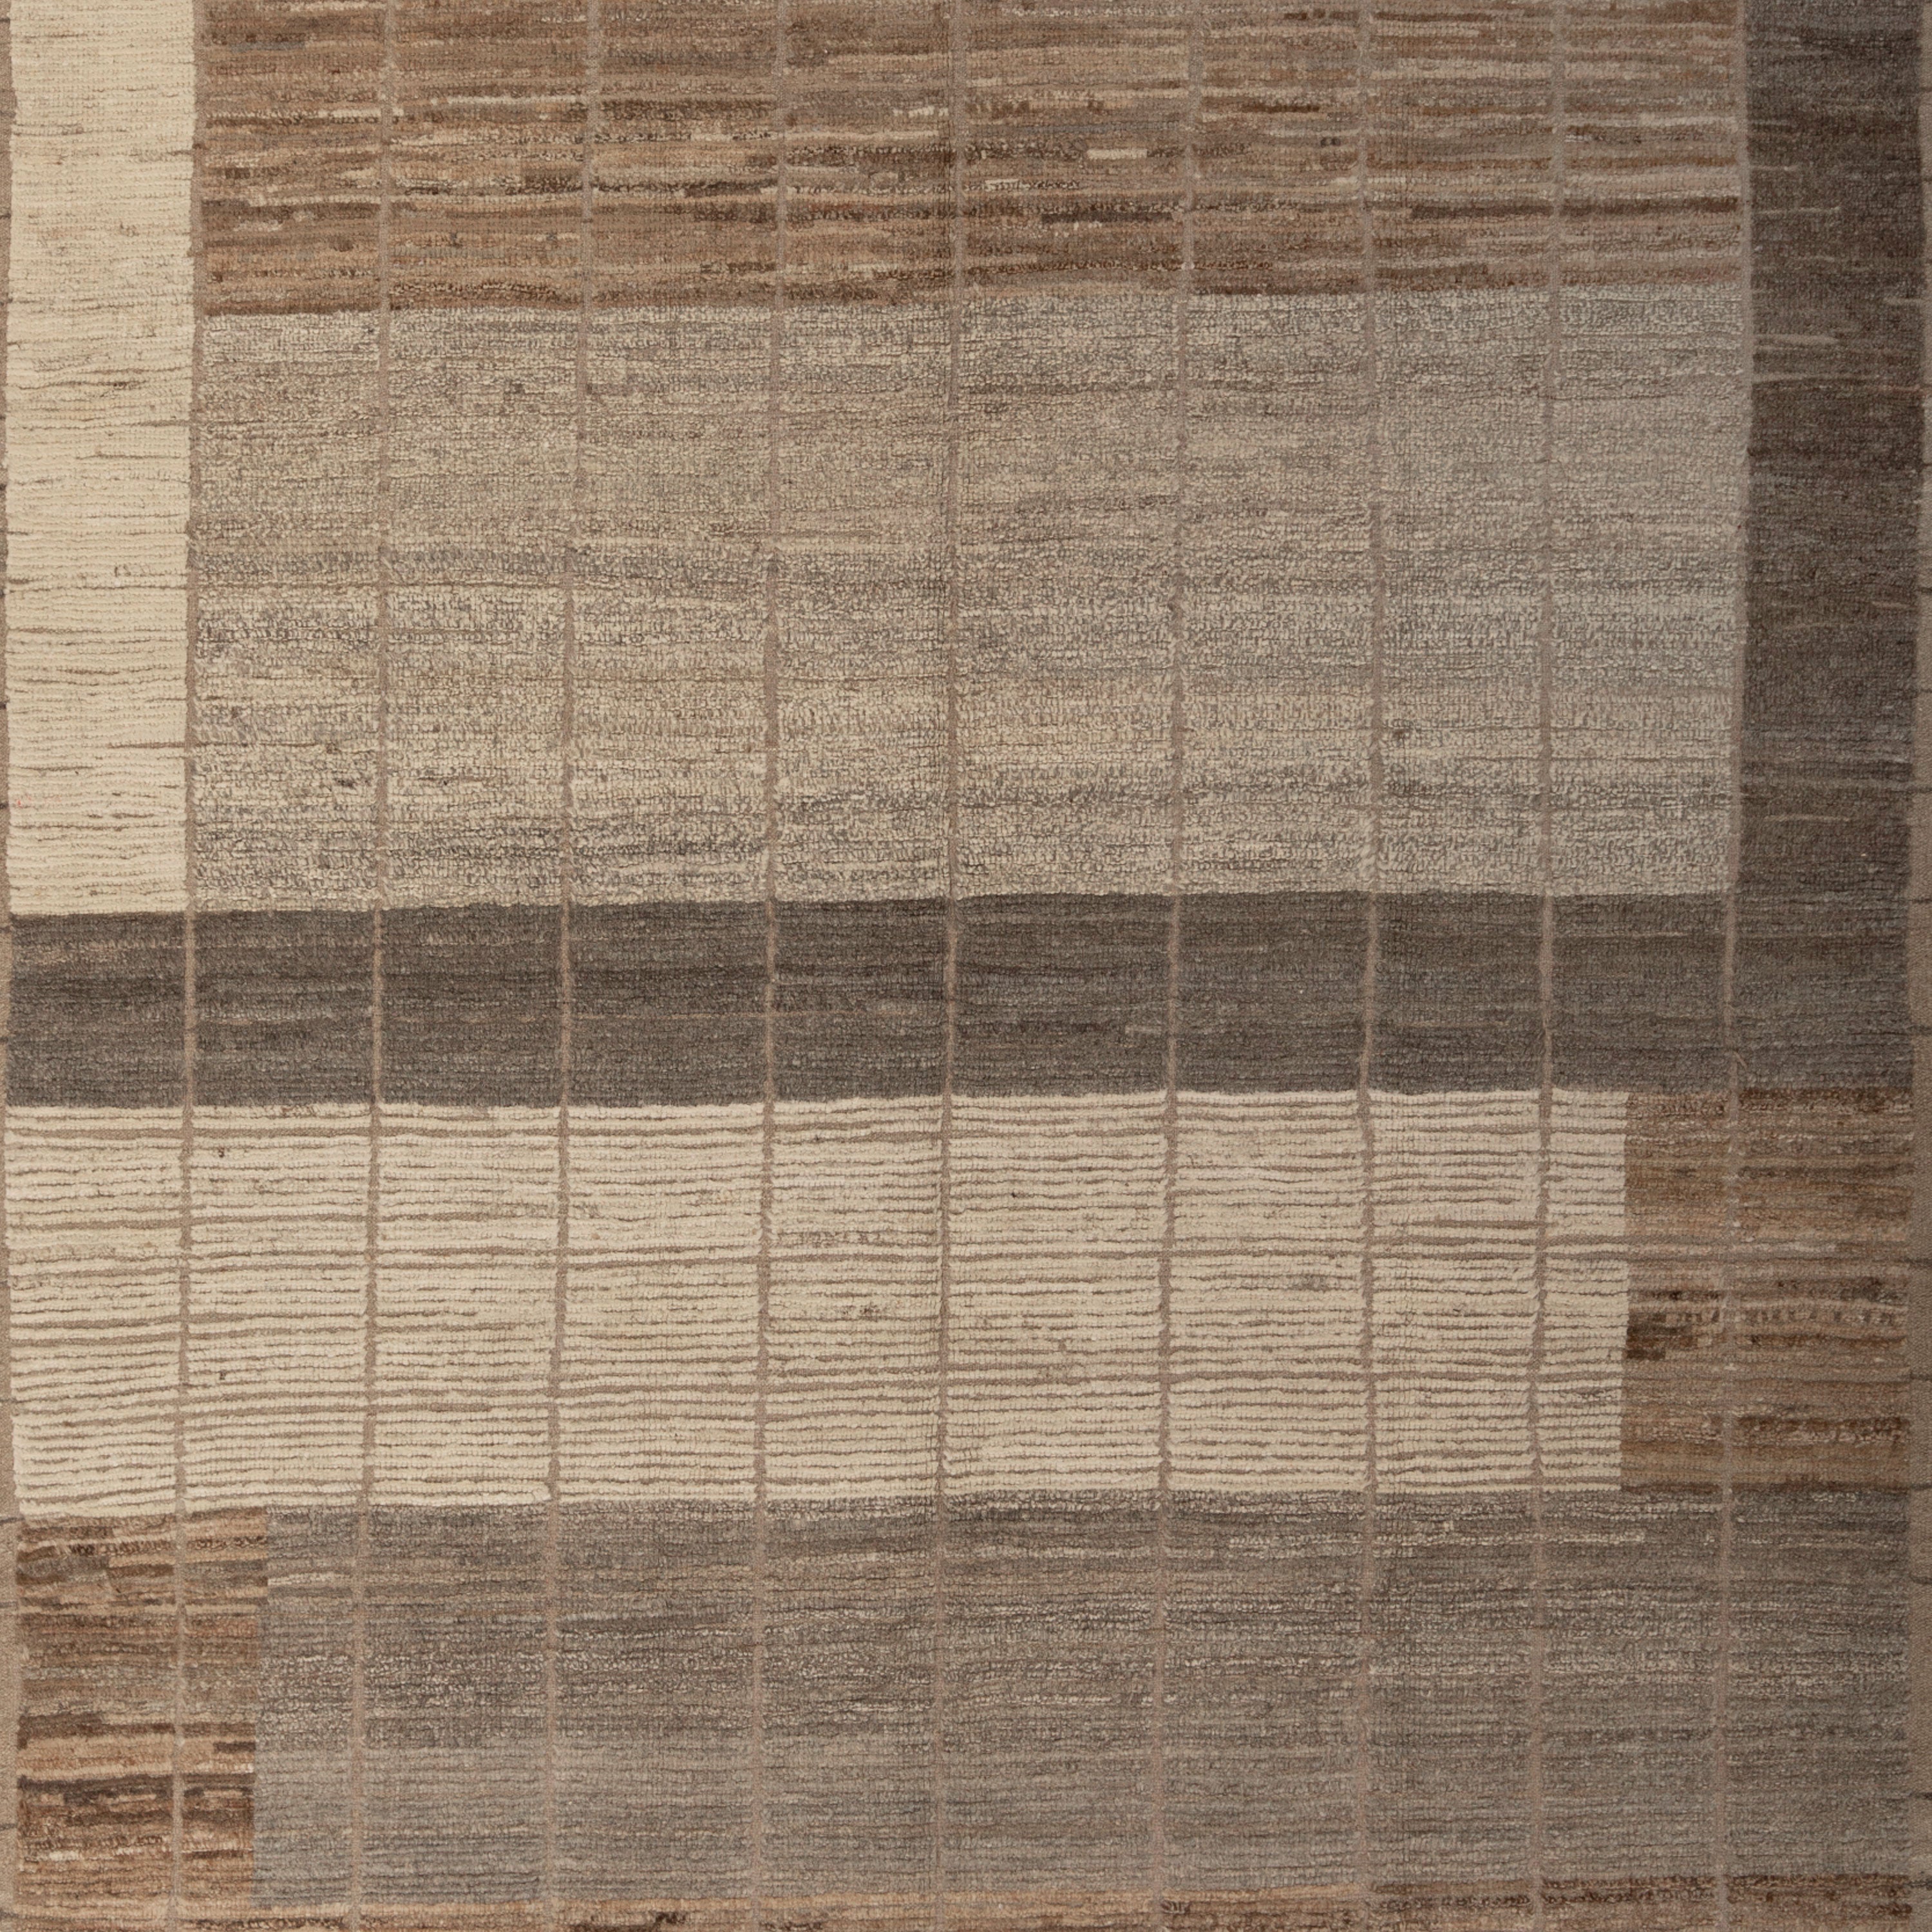 Zameen Patterned Modern Wool Rug - 6'4" x 9'6" Default Title